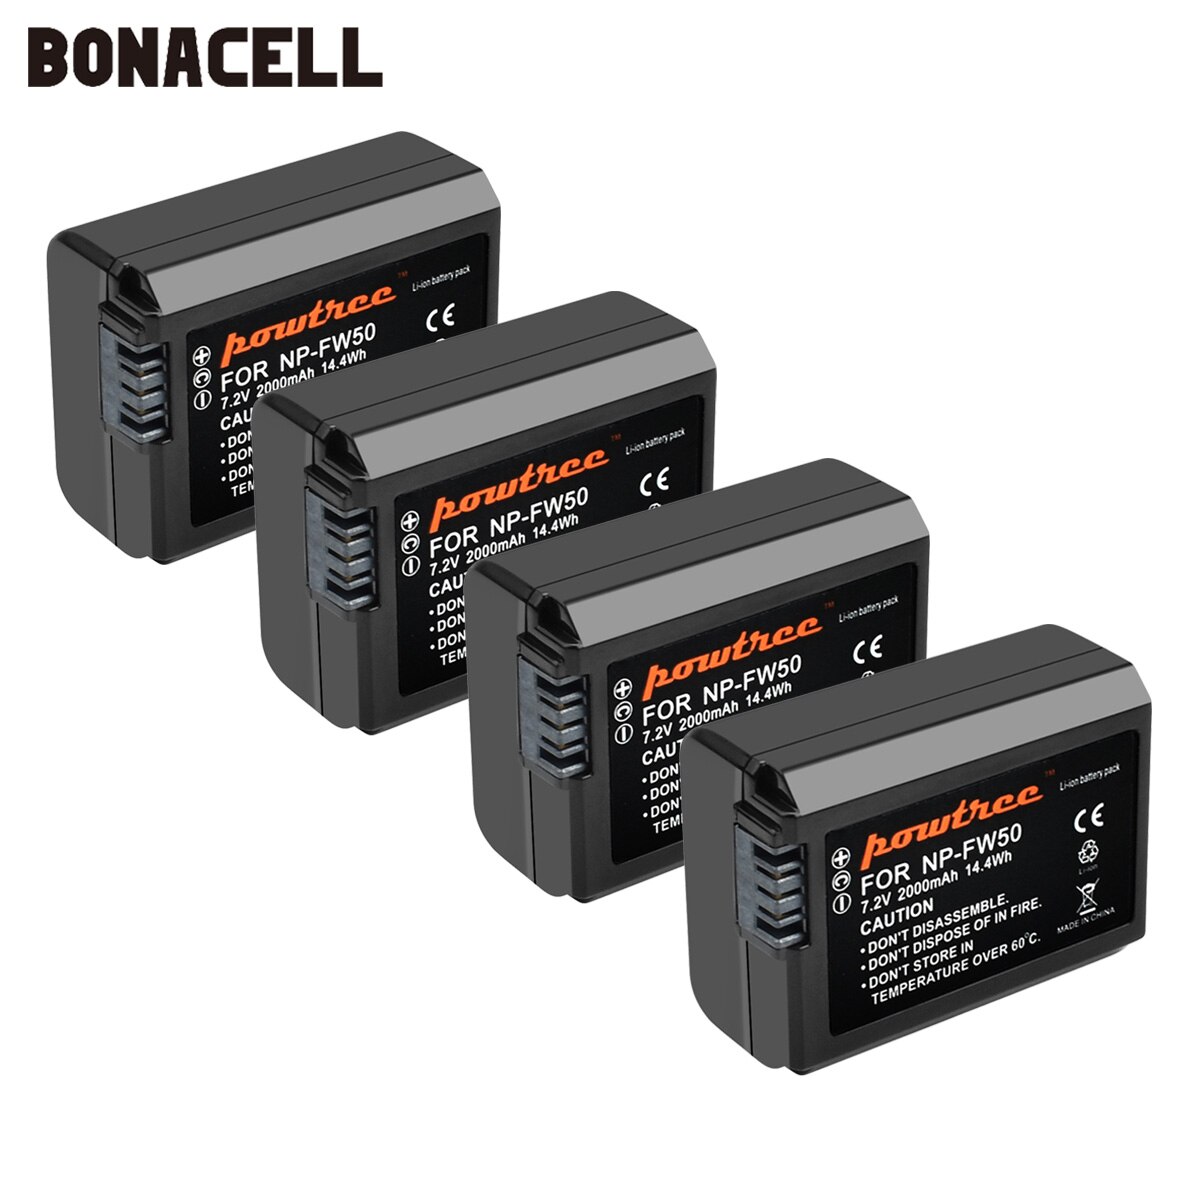 Bonacell 2000mah NP-FW50 NP FW50 batería AKKU para Sony NEX-7 NEX-5N NEX-5R NEX-F3 NEX-3D alfa a5000 a6000 DSC-RX10 Alpha 7 a7II: 4 Pack Battery